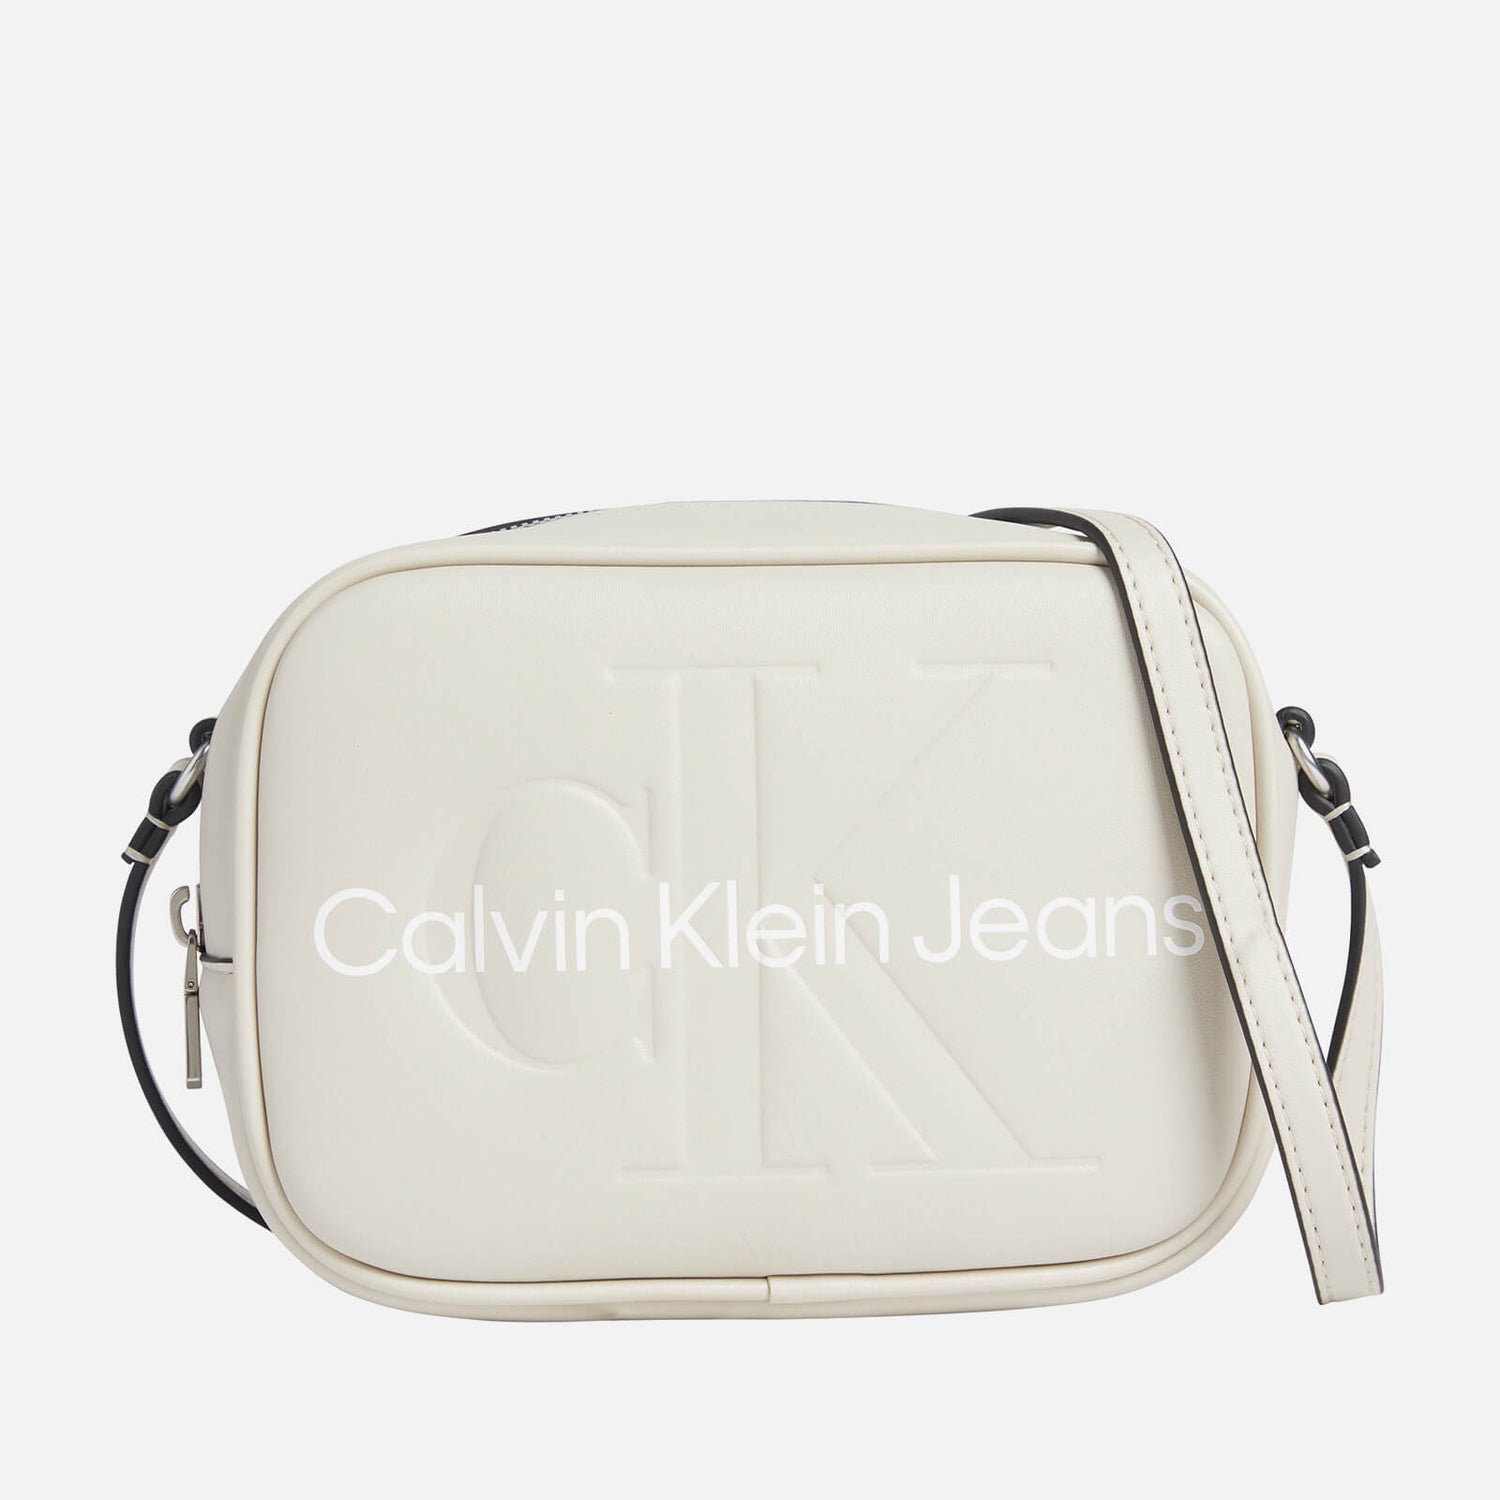 Calvin Klein Jeans Women's Sculpted Camera Bag Mono - Eggshell